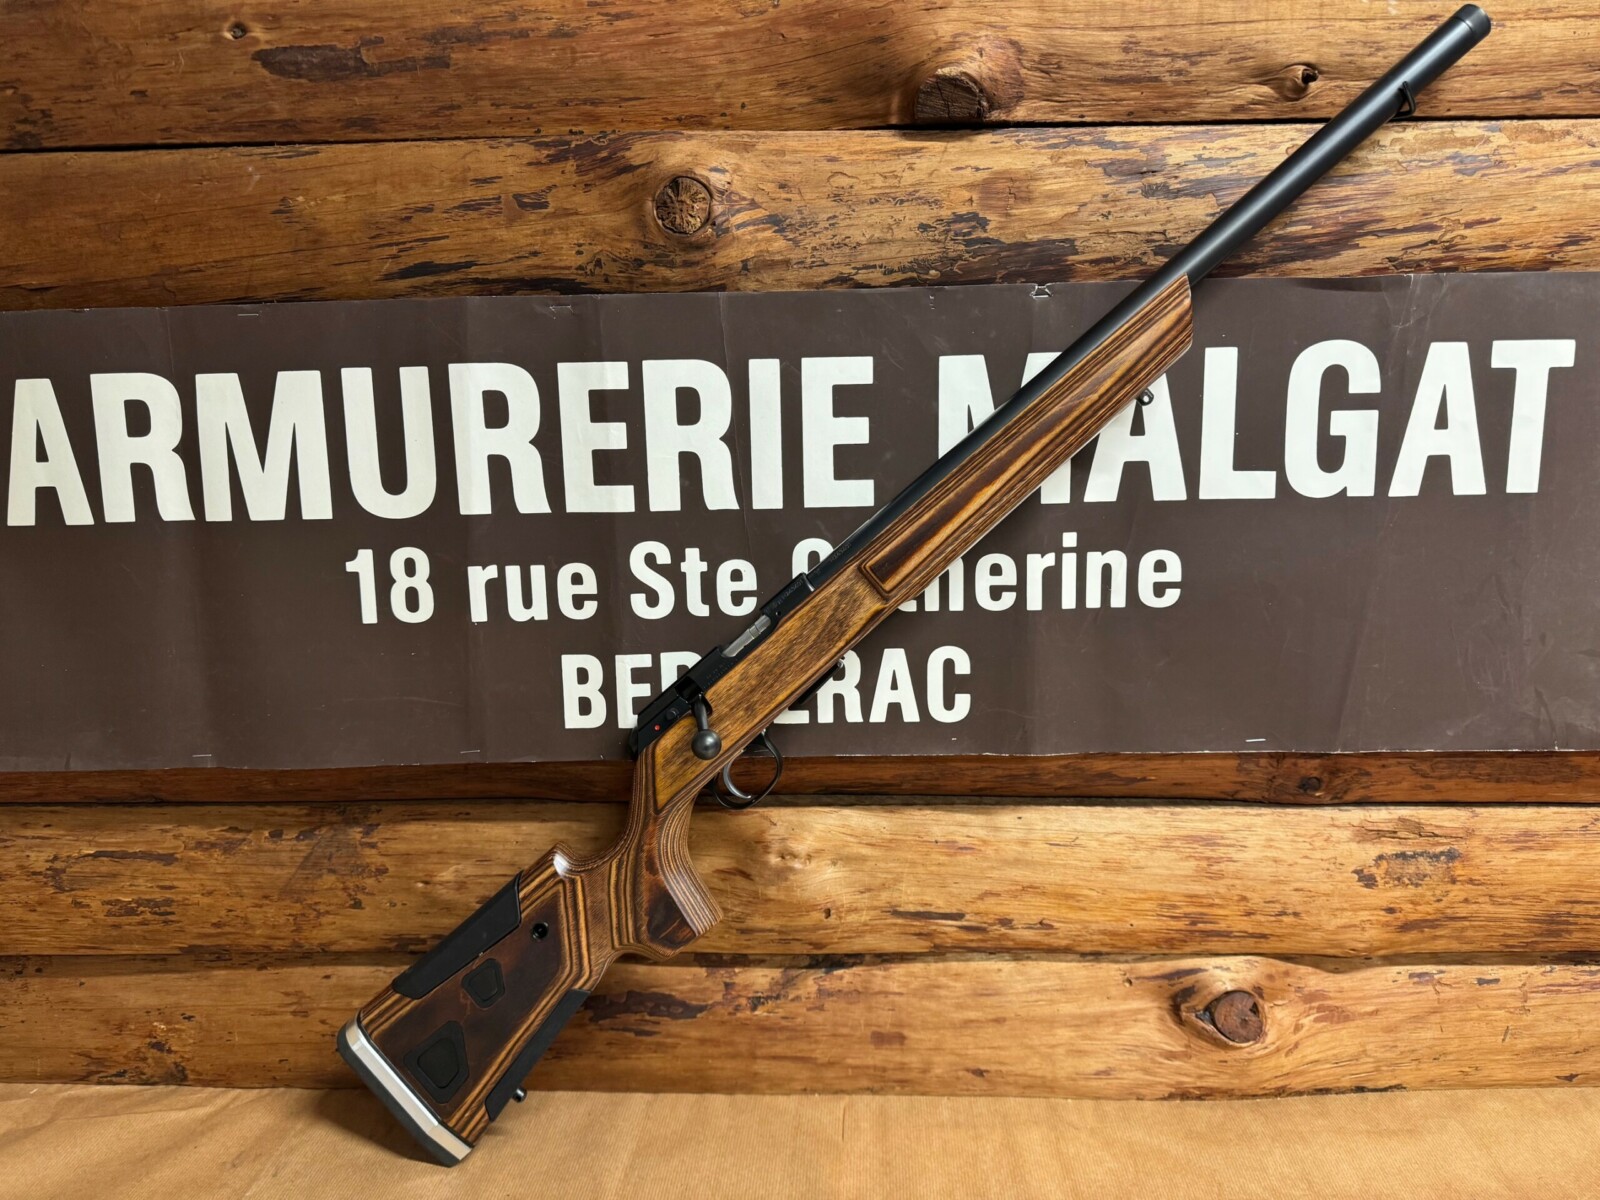 Armurerie Malgat Armurerie Dordogne IMG 6057